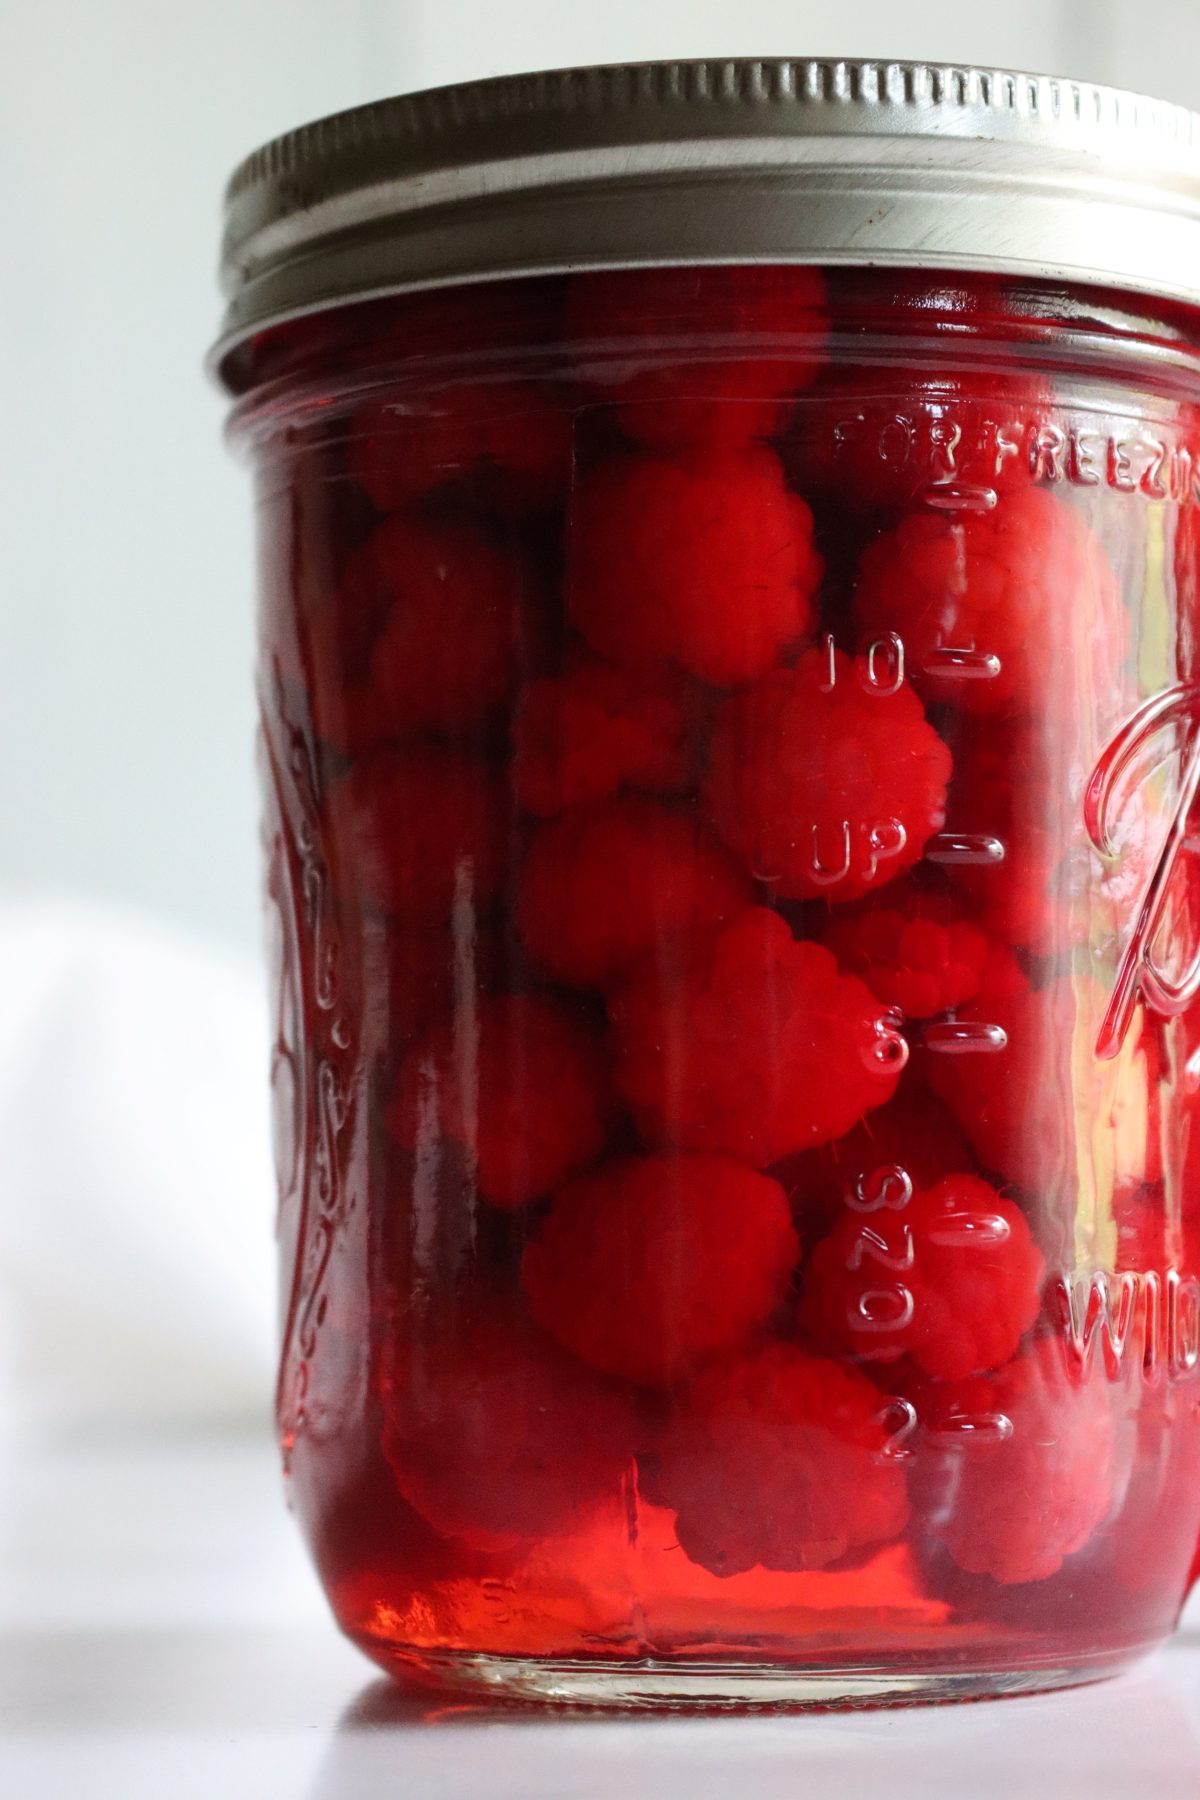 Canning Raspberries